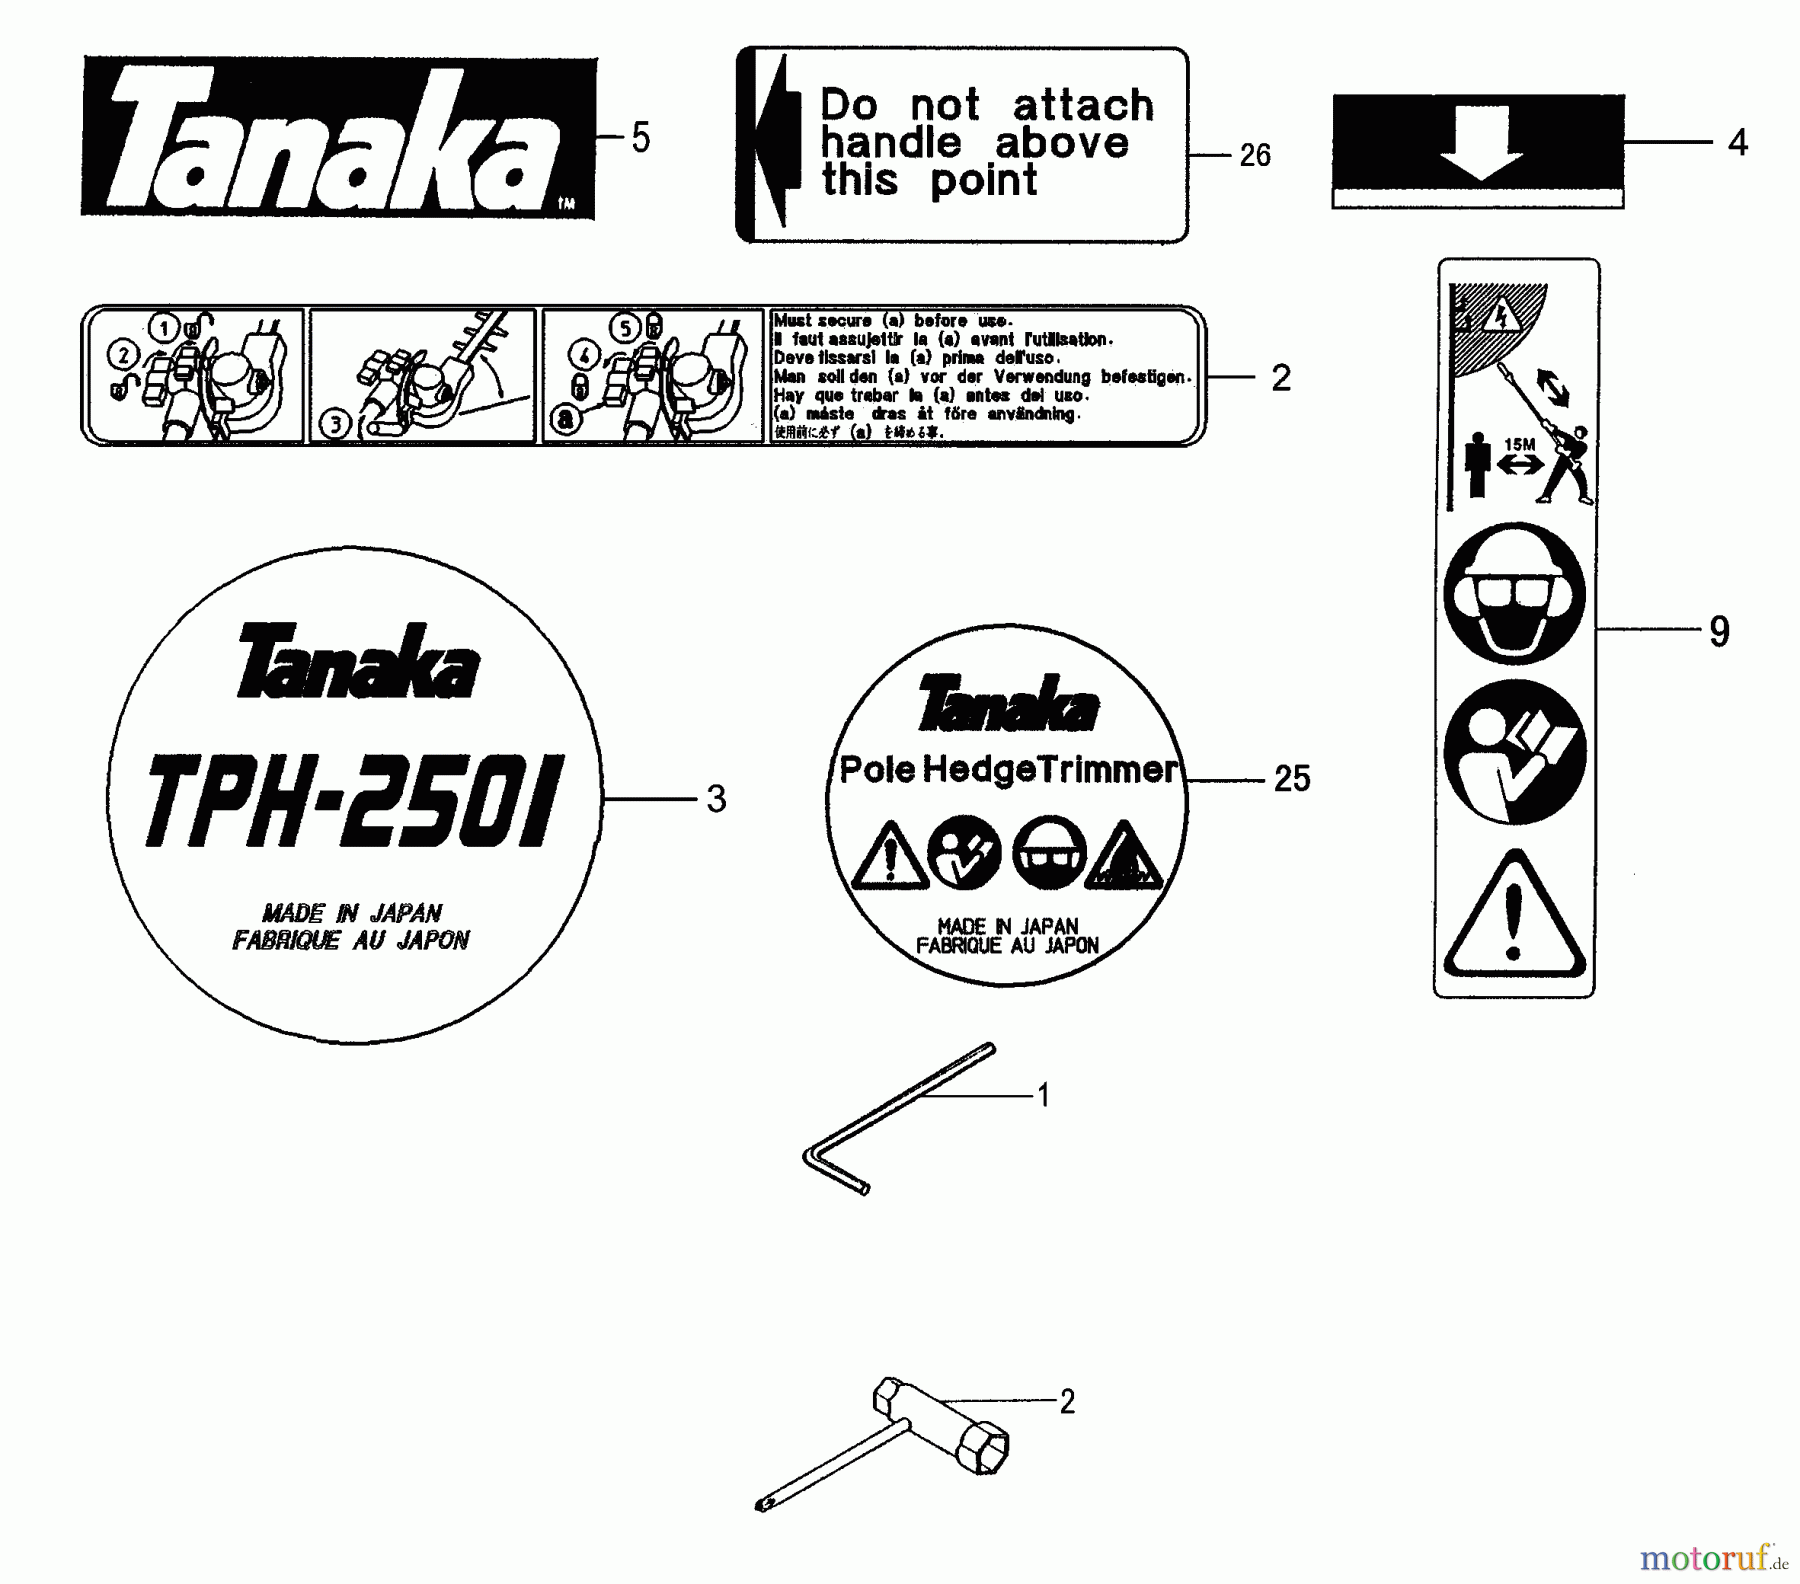  Tanaka Heckenscheeren TPH-2501 - Tanaka Articulating Pole Hedge Trimmer Decals